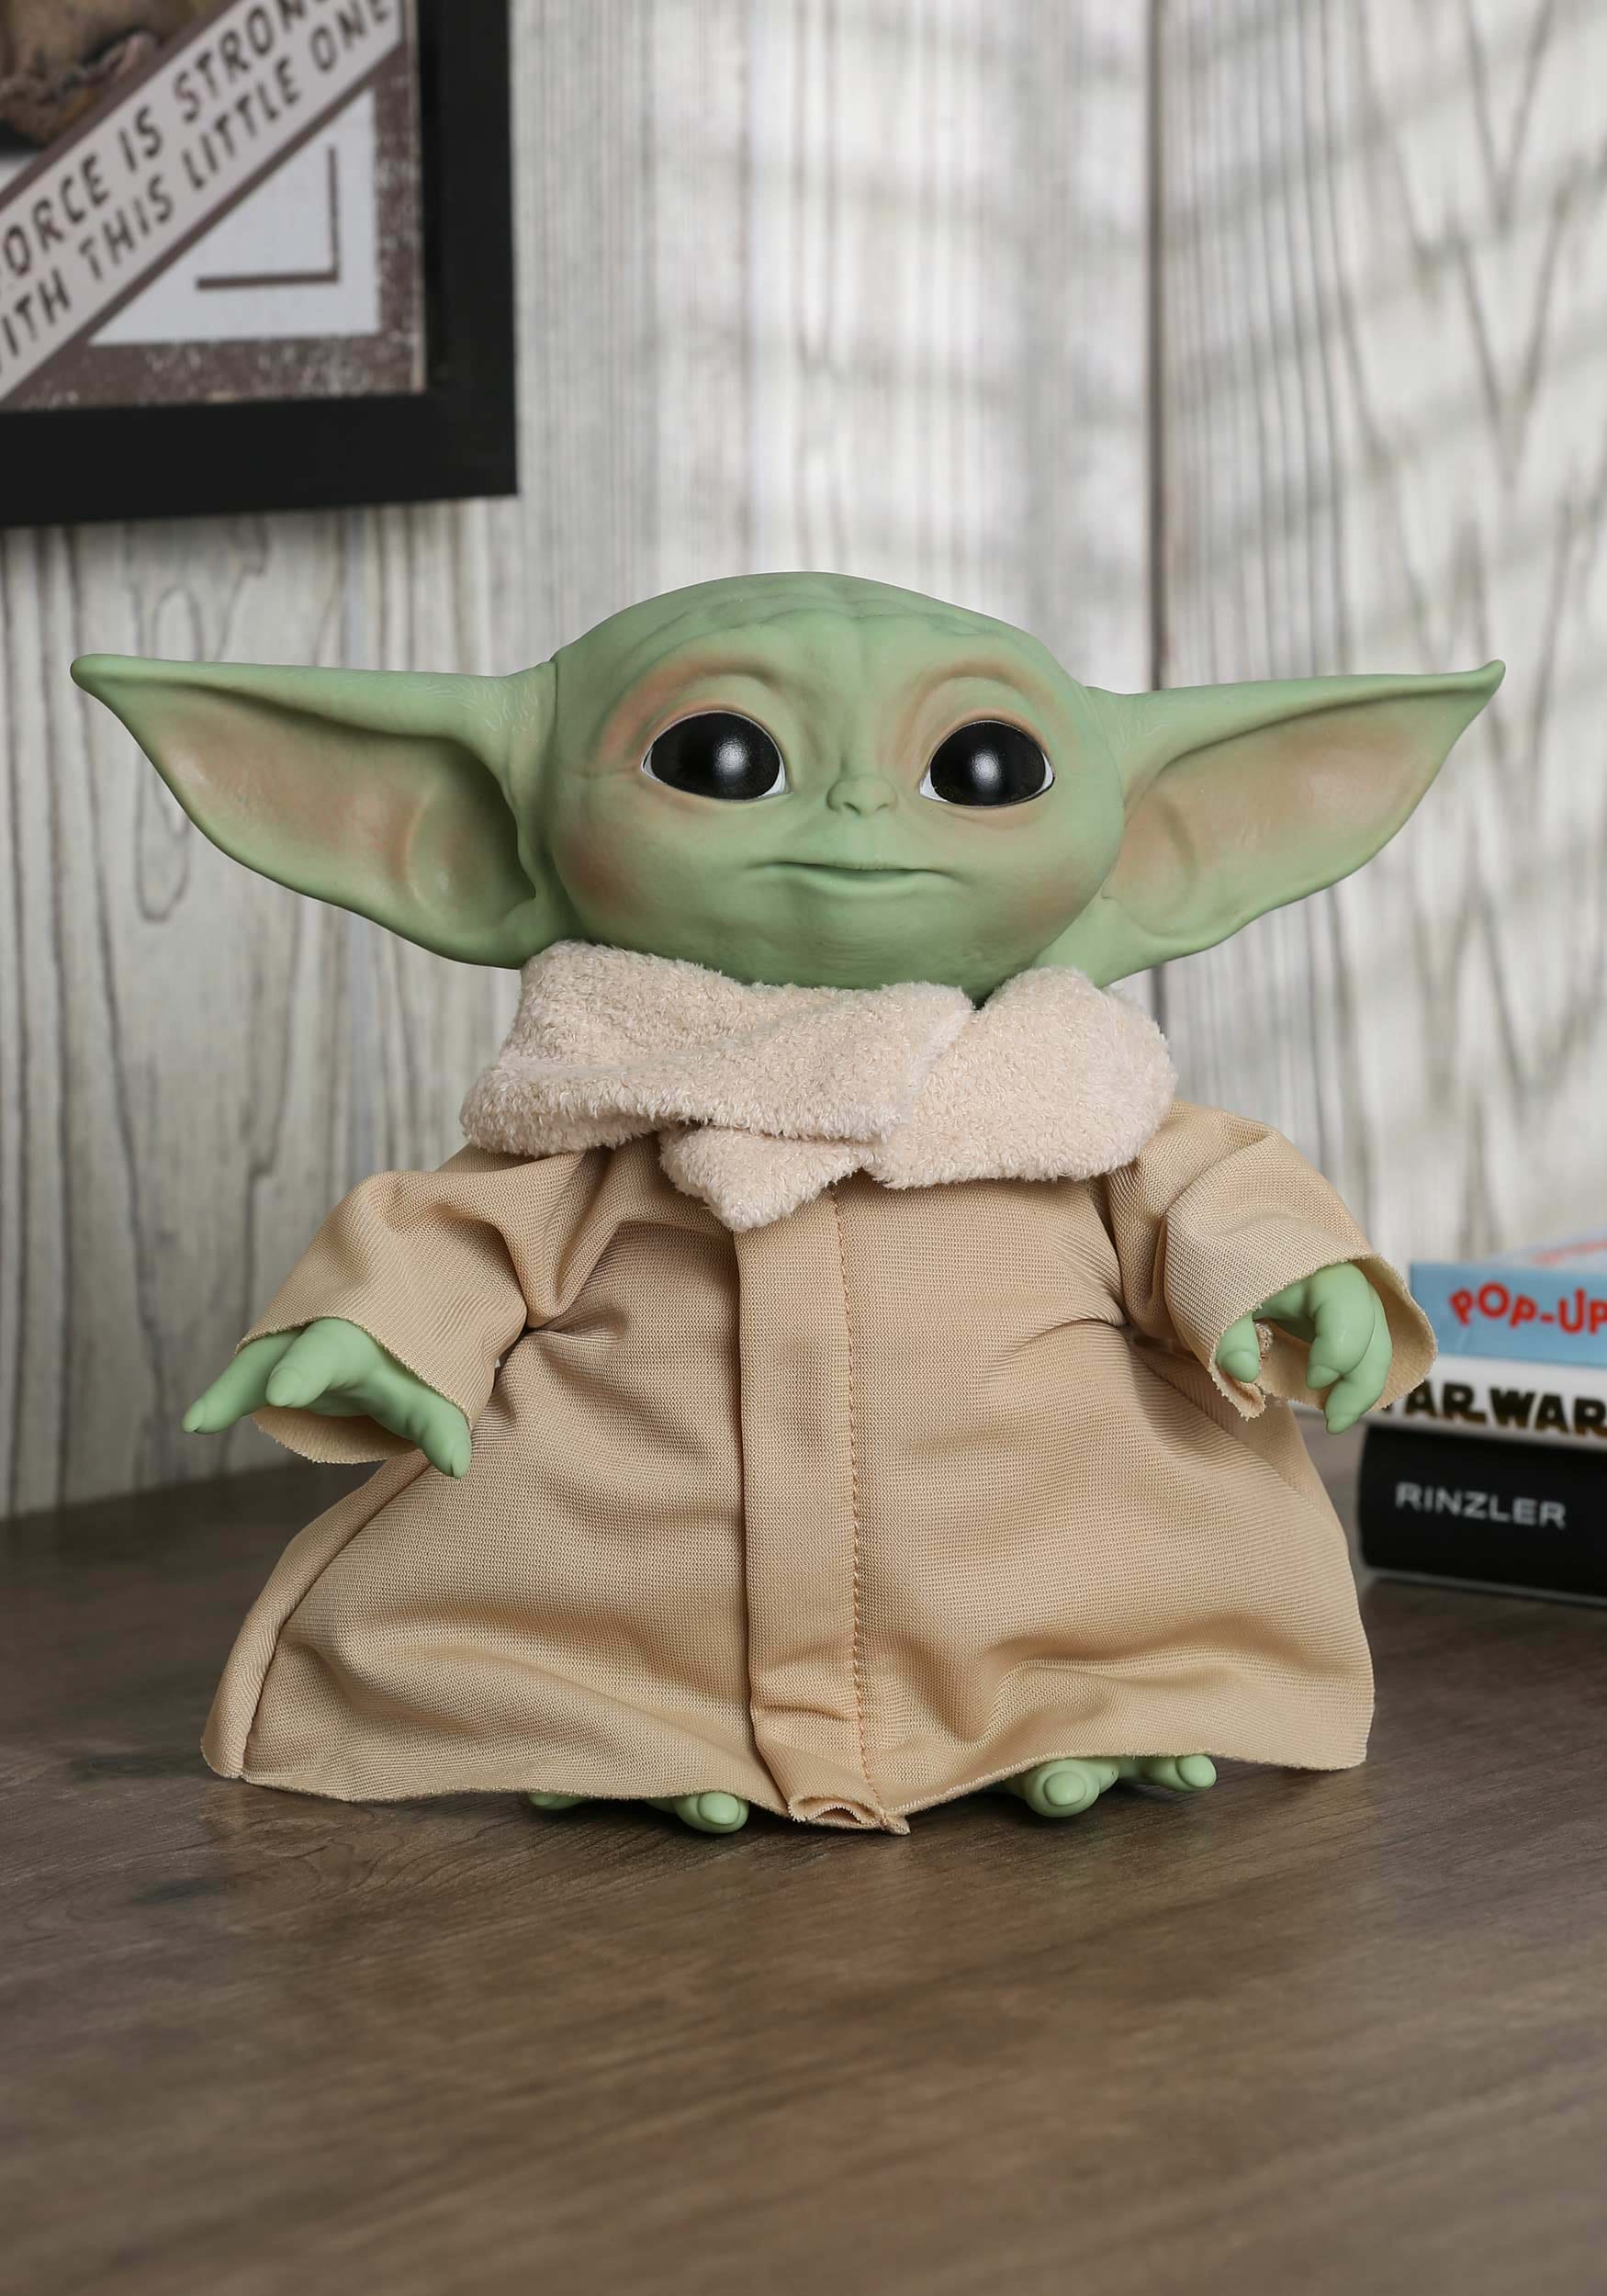 Star Wars Baby Yoda 8 inch Plush The Mandalorian The Child NEW w/ Tags 